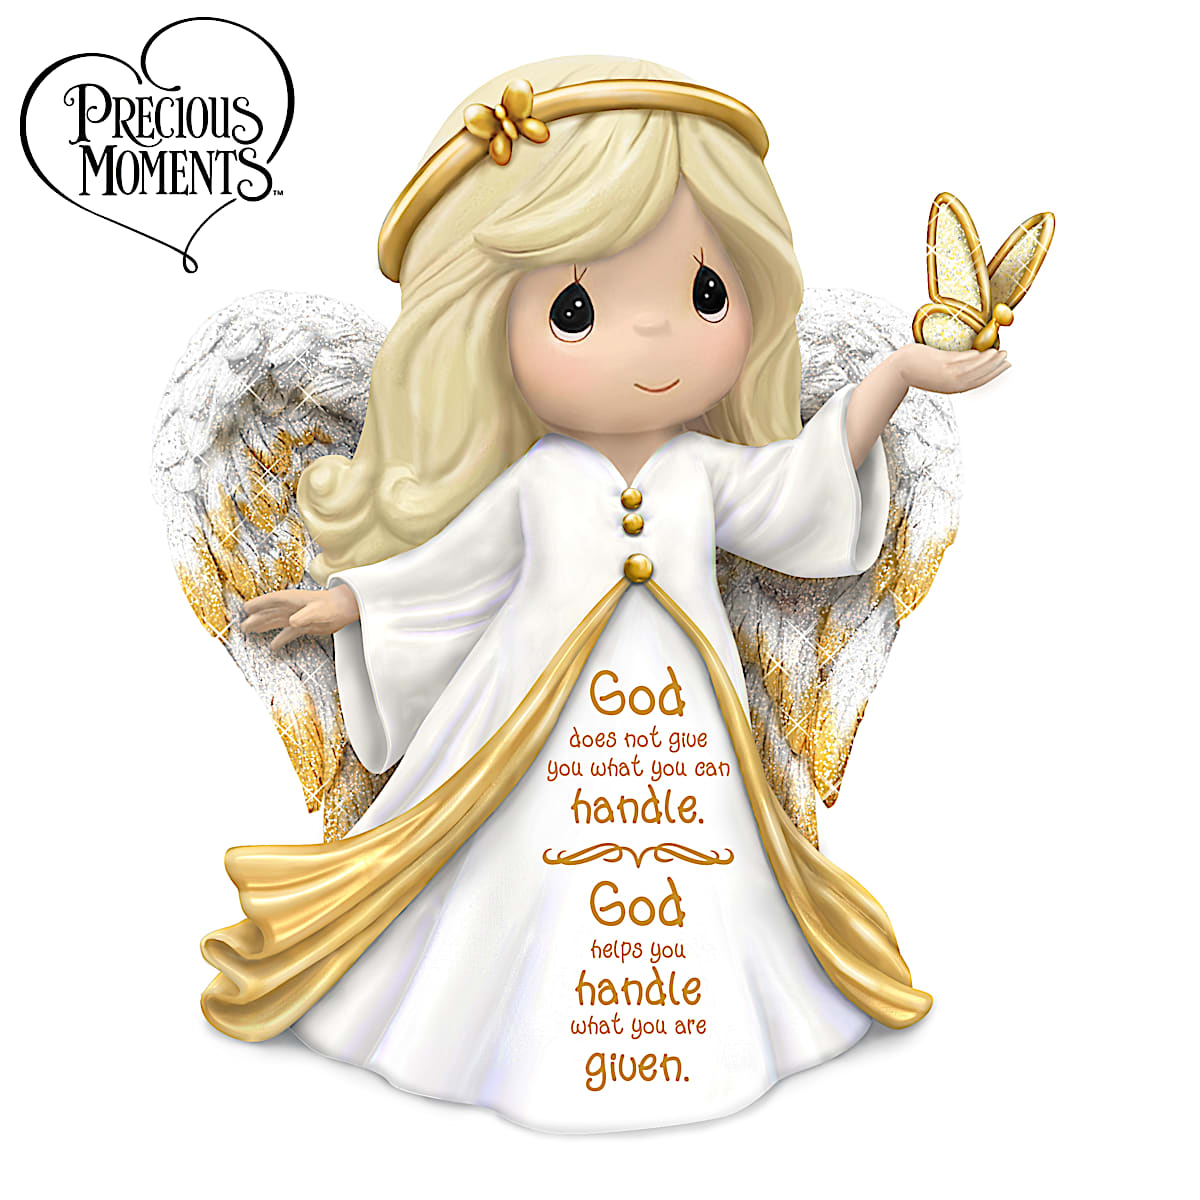 Precious Moments Gods Help Religious Angel Figurine Hand-Painted